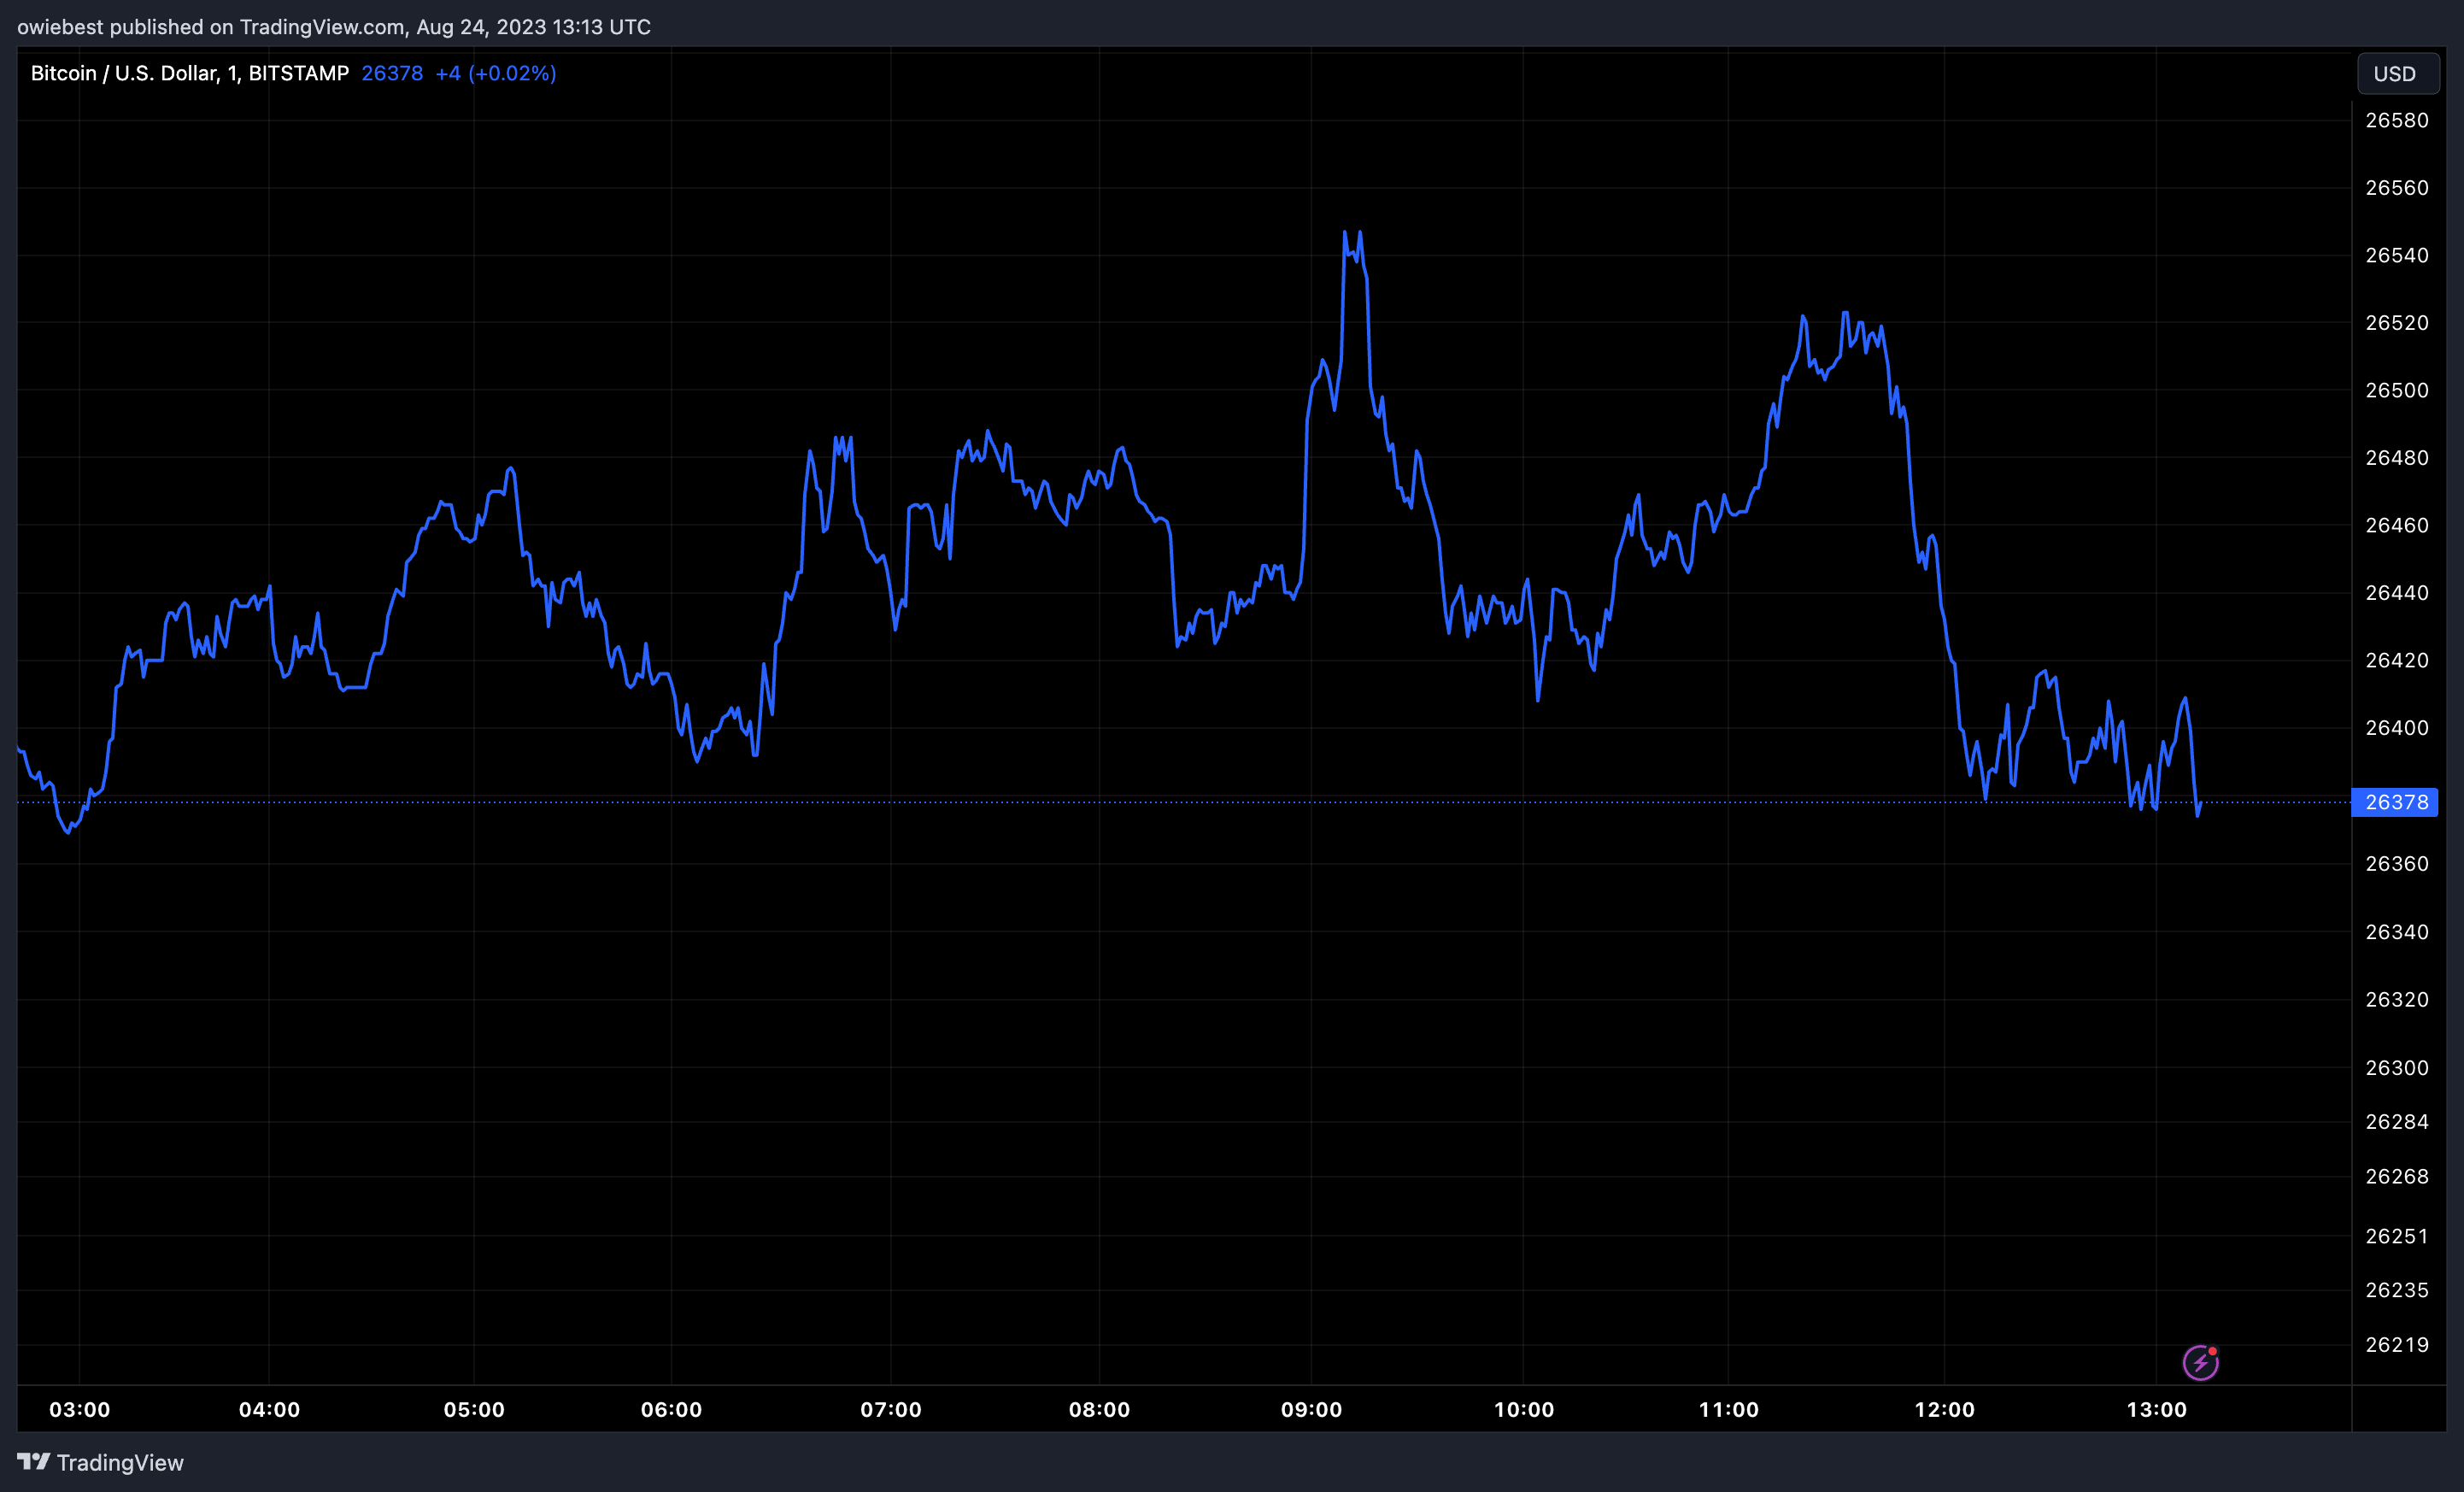 График цен на биткоин от Tradingview.com (BlackRock Spot Bitcoin ETF)